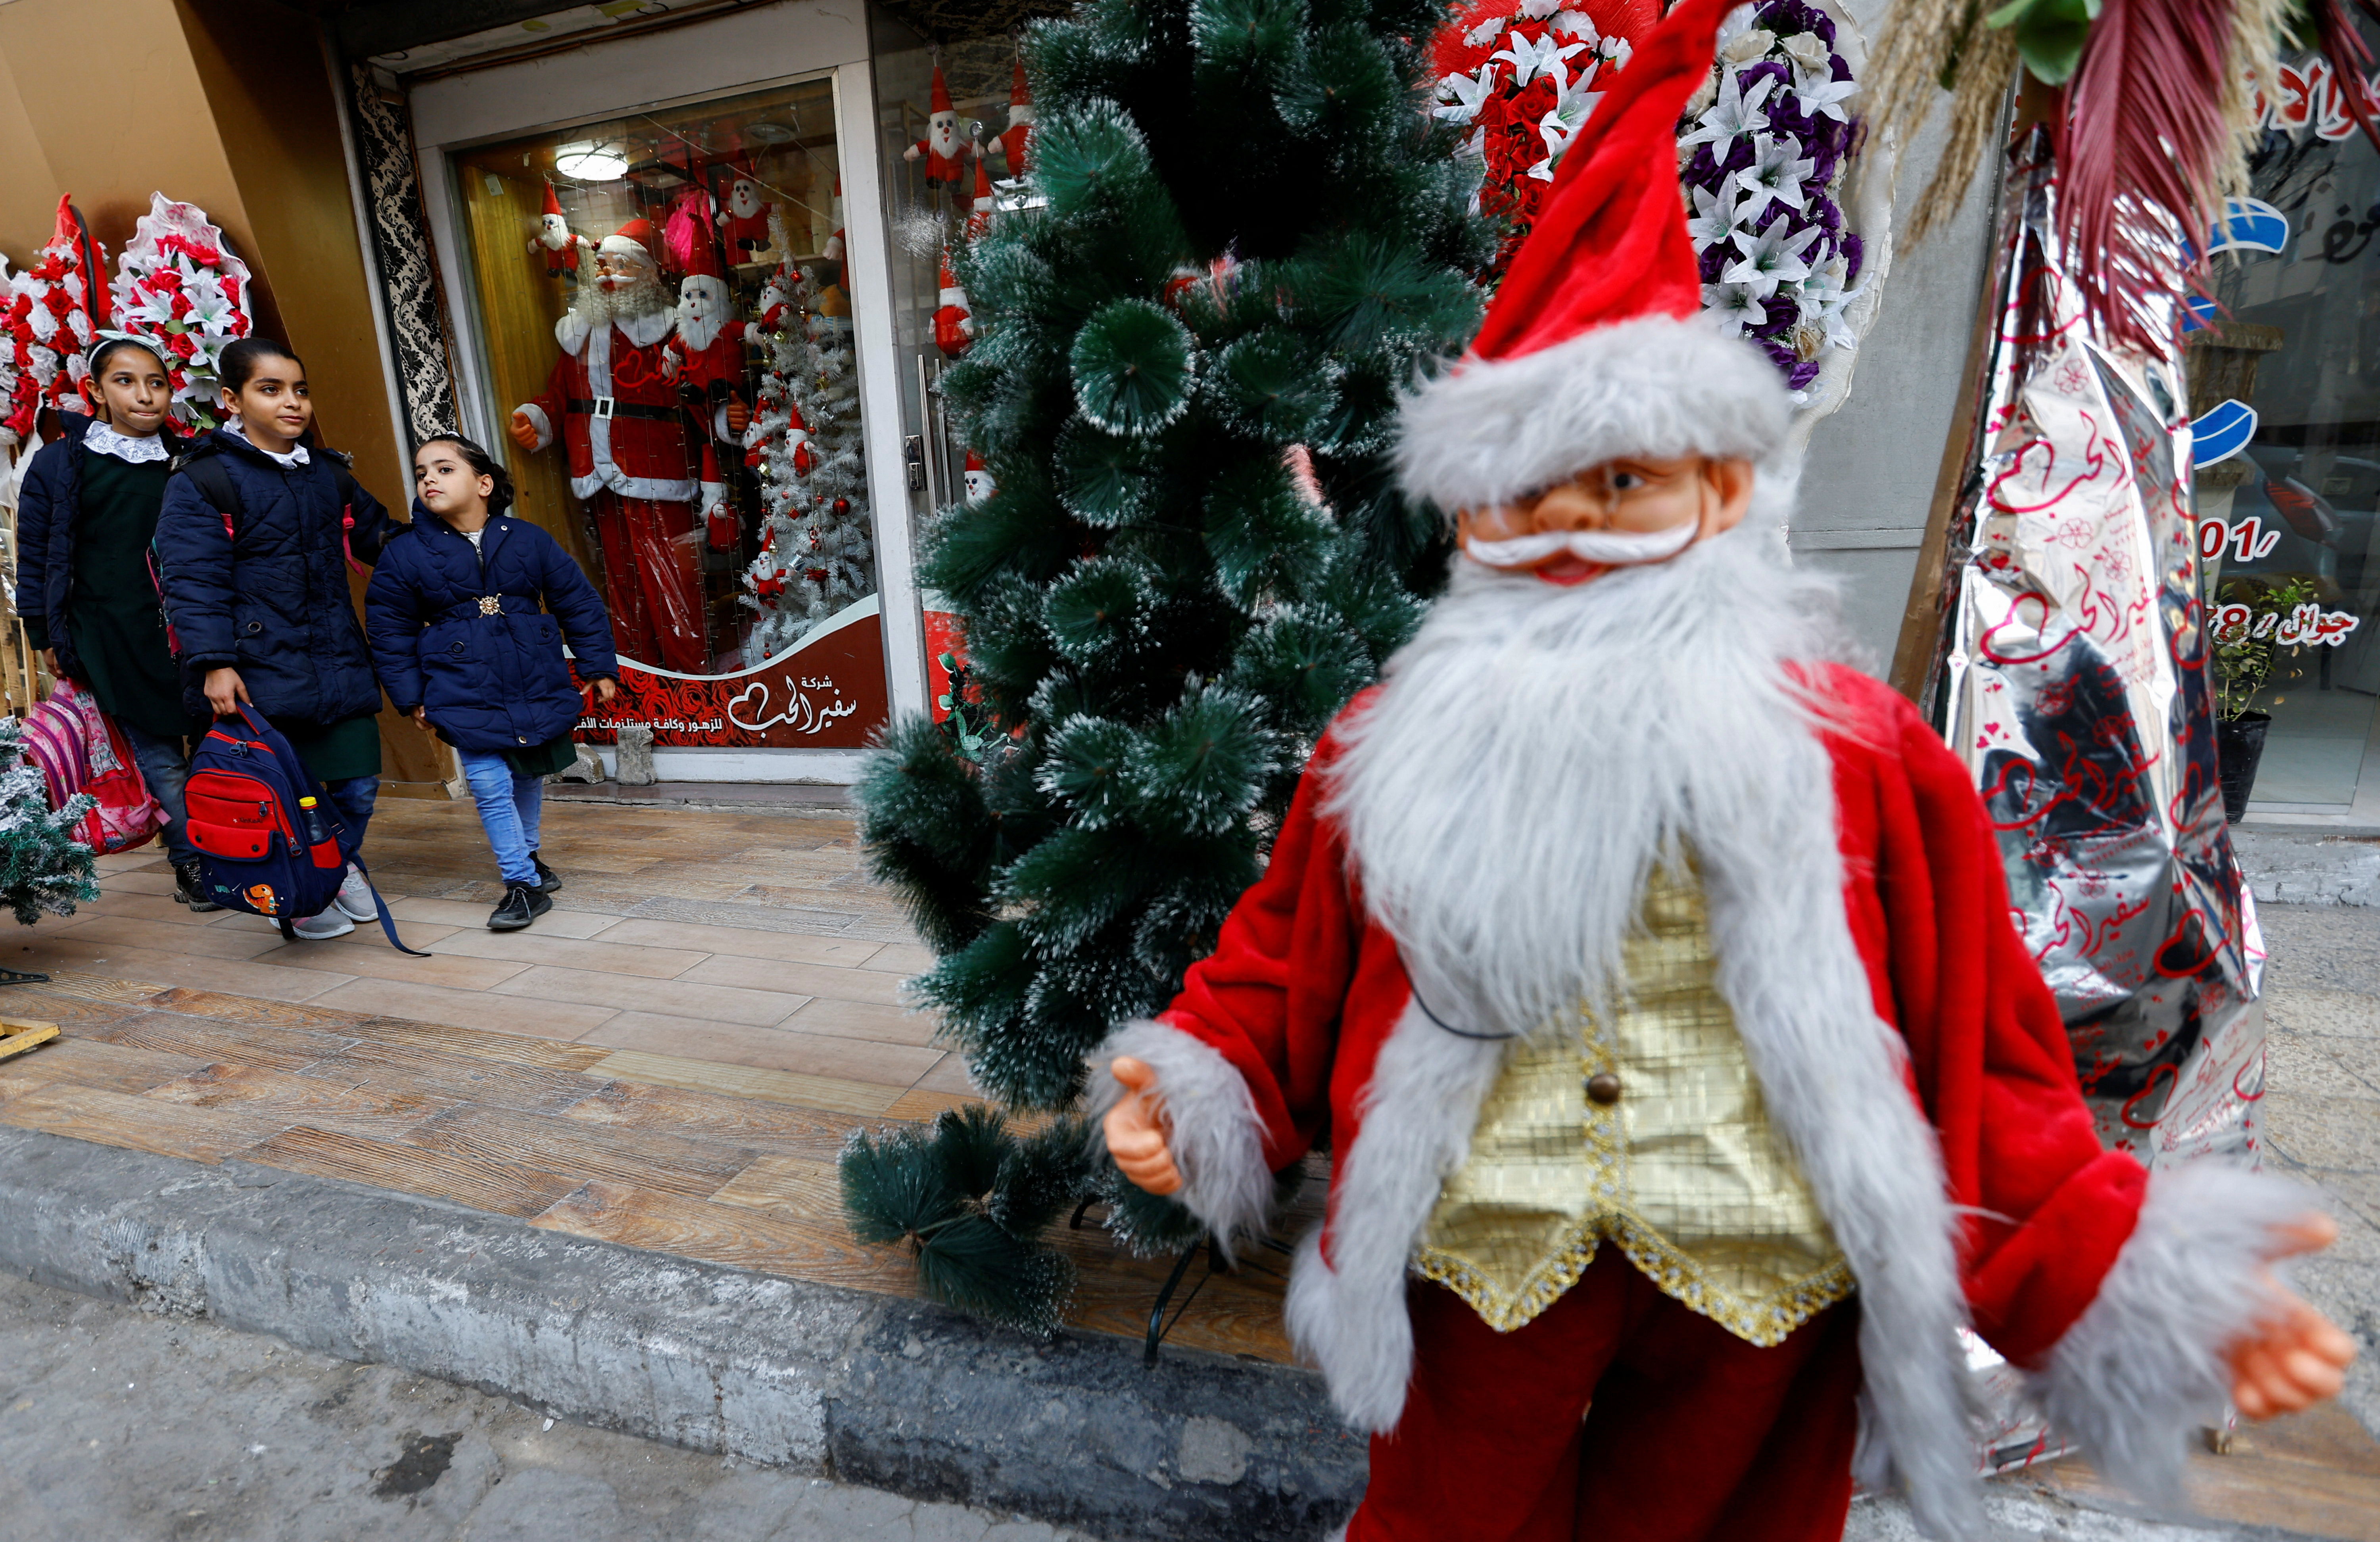 Gaza Christians say Israel permits policy impacts Christmas jubilee in Gaza